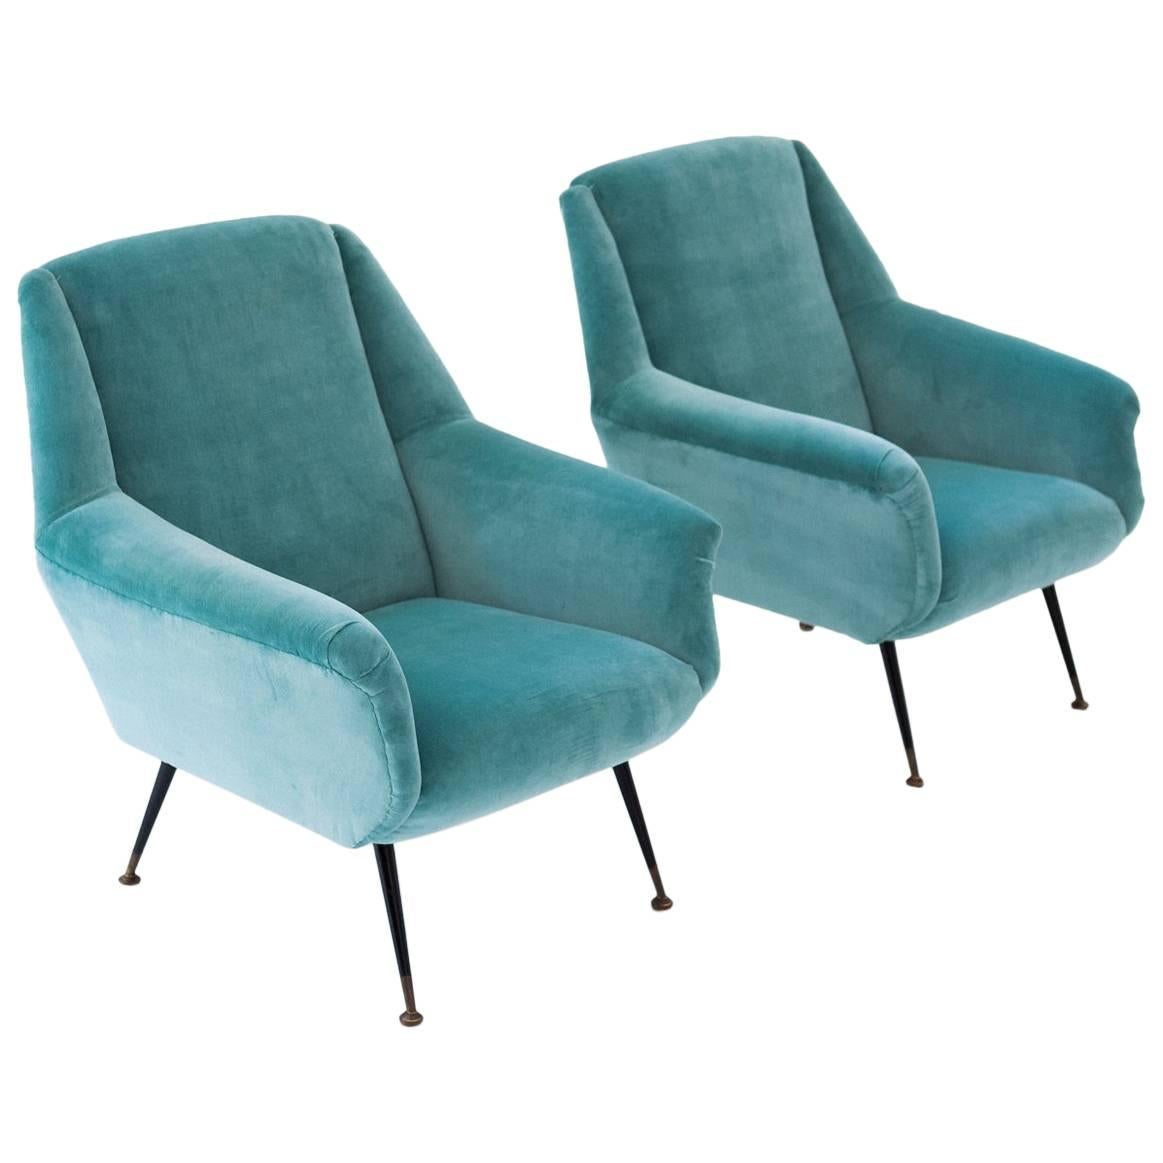 Pair of Italian Turquoise Velvet Lounge Chairs, 1950s